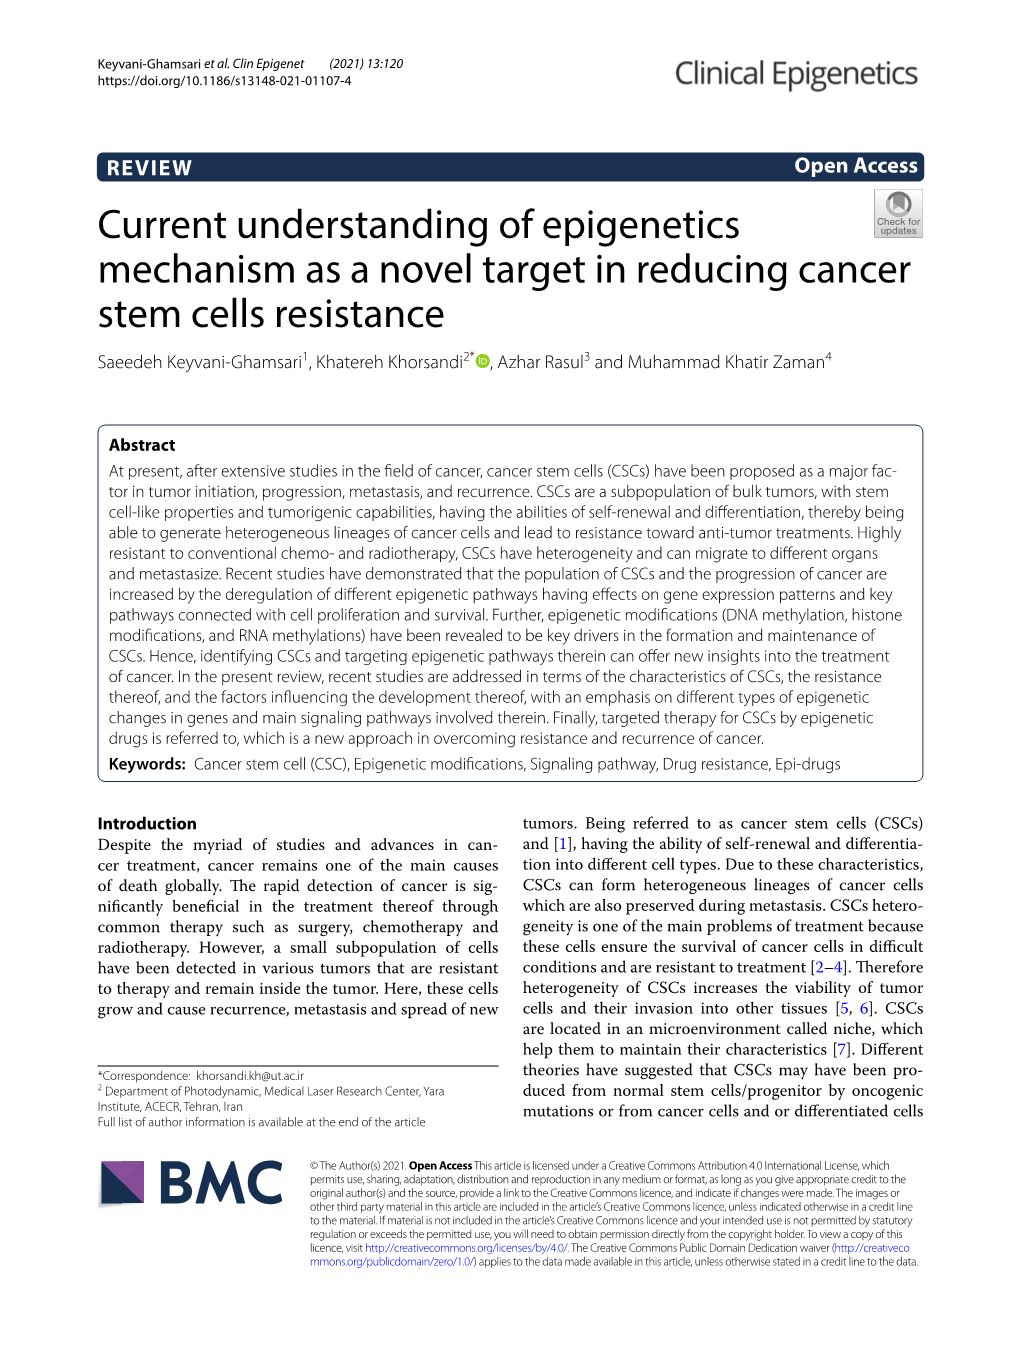 Current Understanding of Epigenetics Mechanism As a Novel Target In